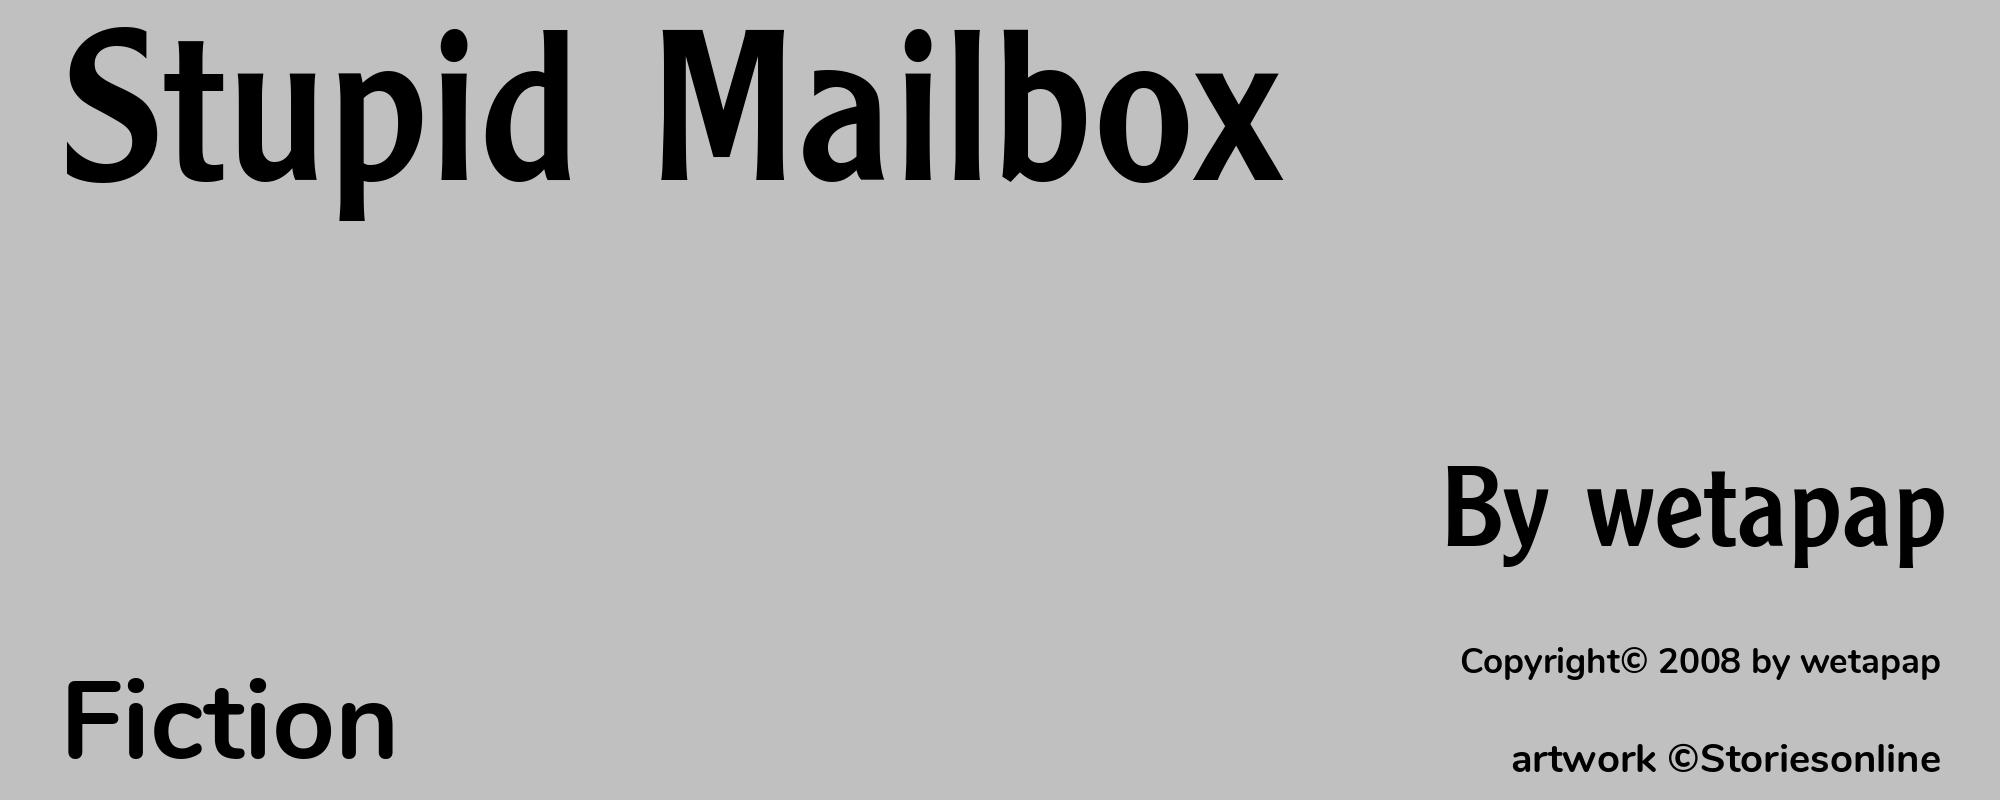 Stupid Mailbox - Cover